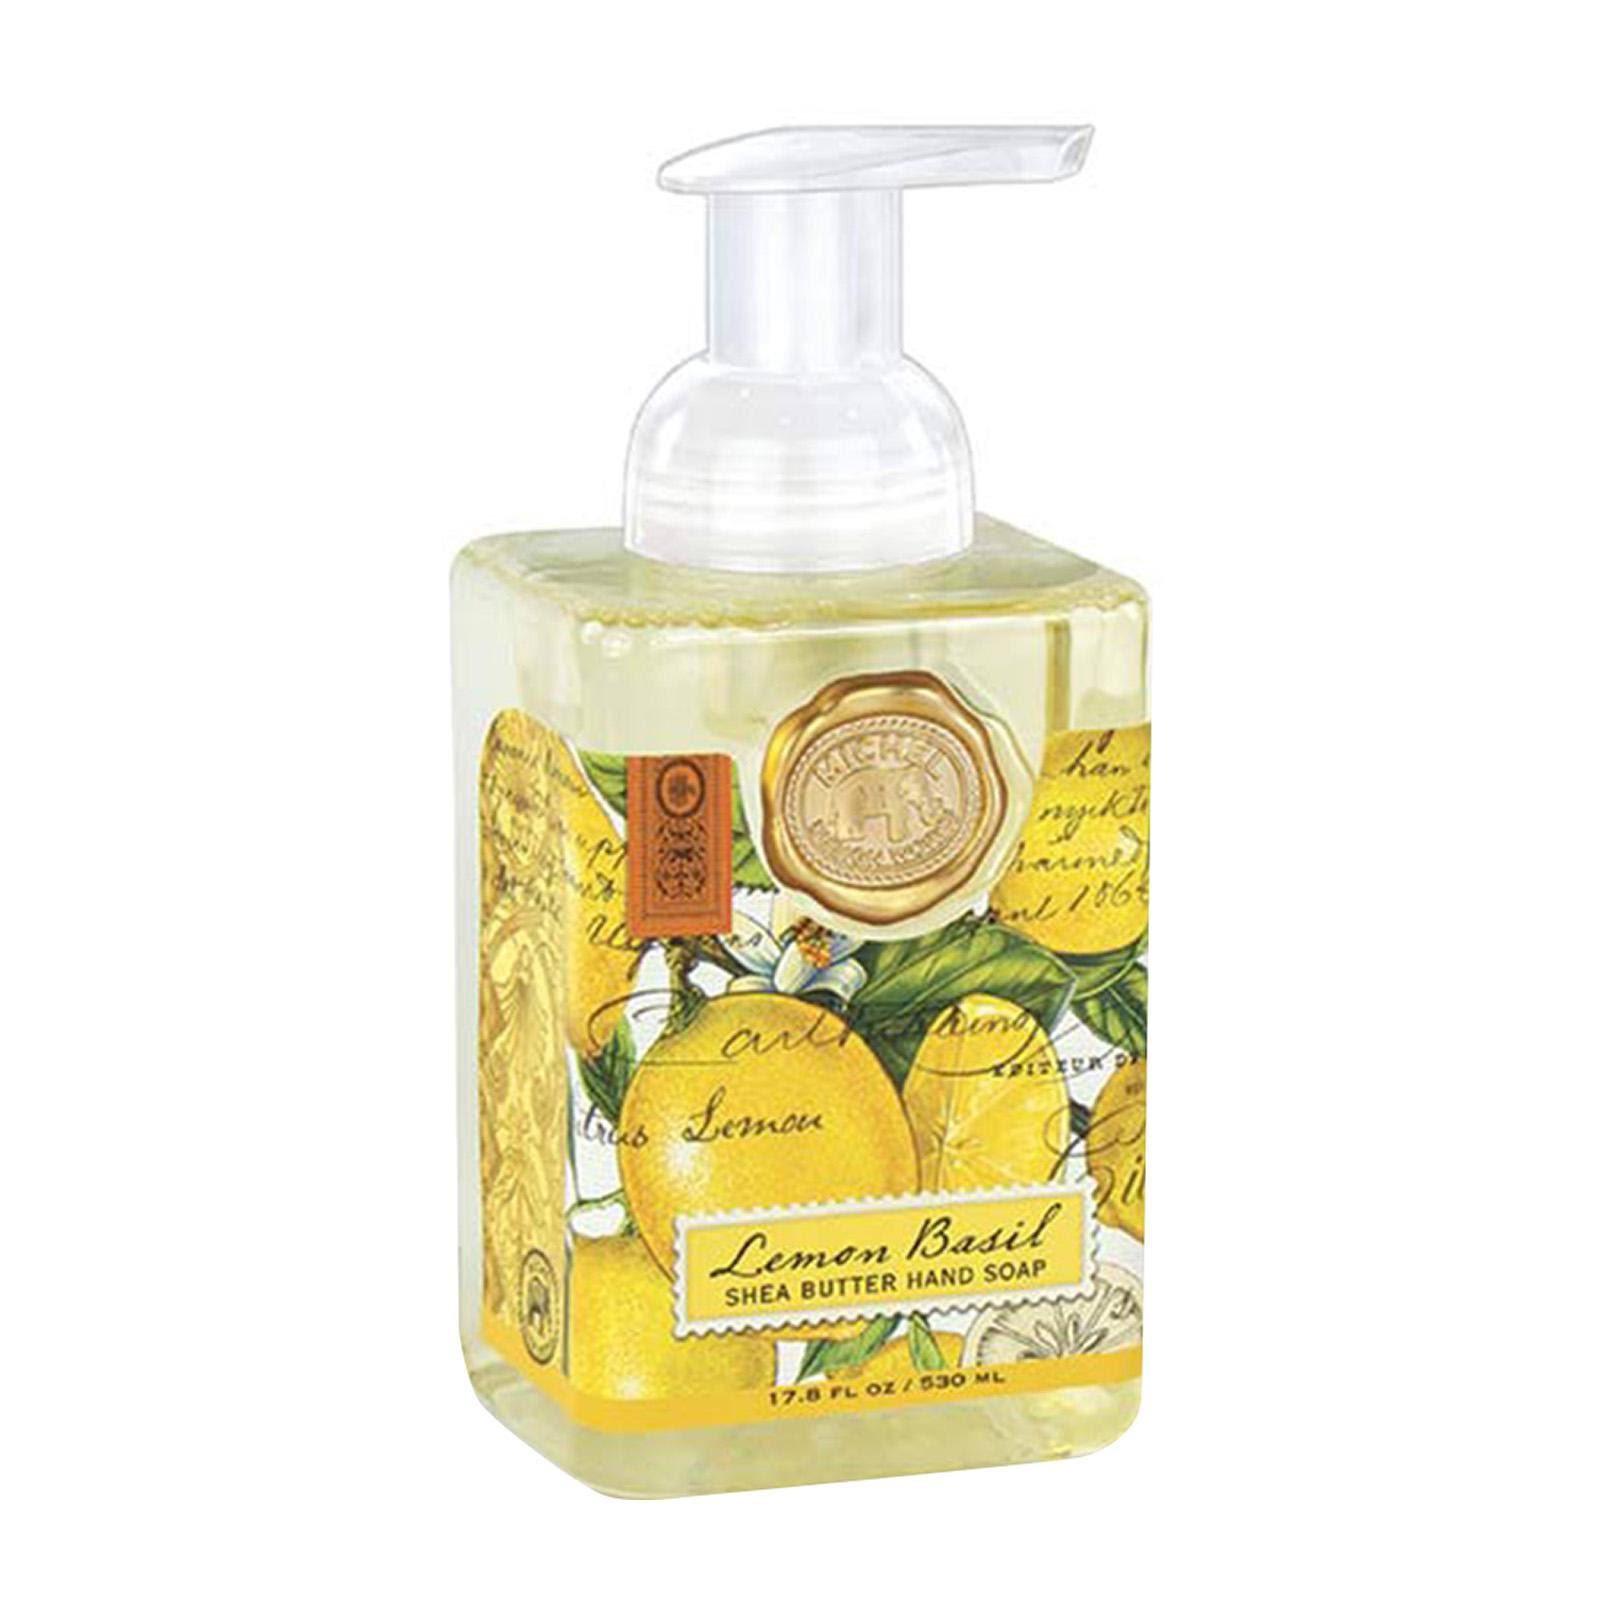 Michel Design Works Foaming Soap - Lemon Basil, 17.8oz